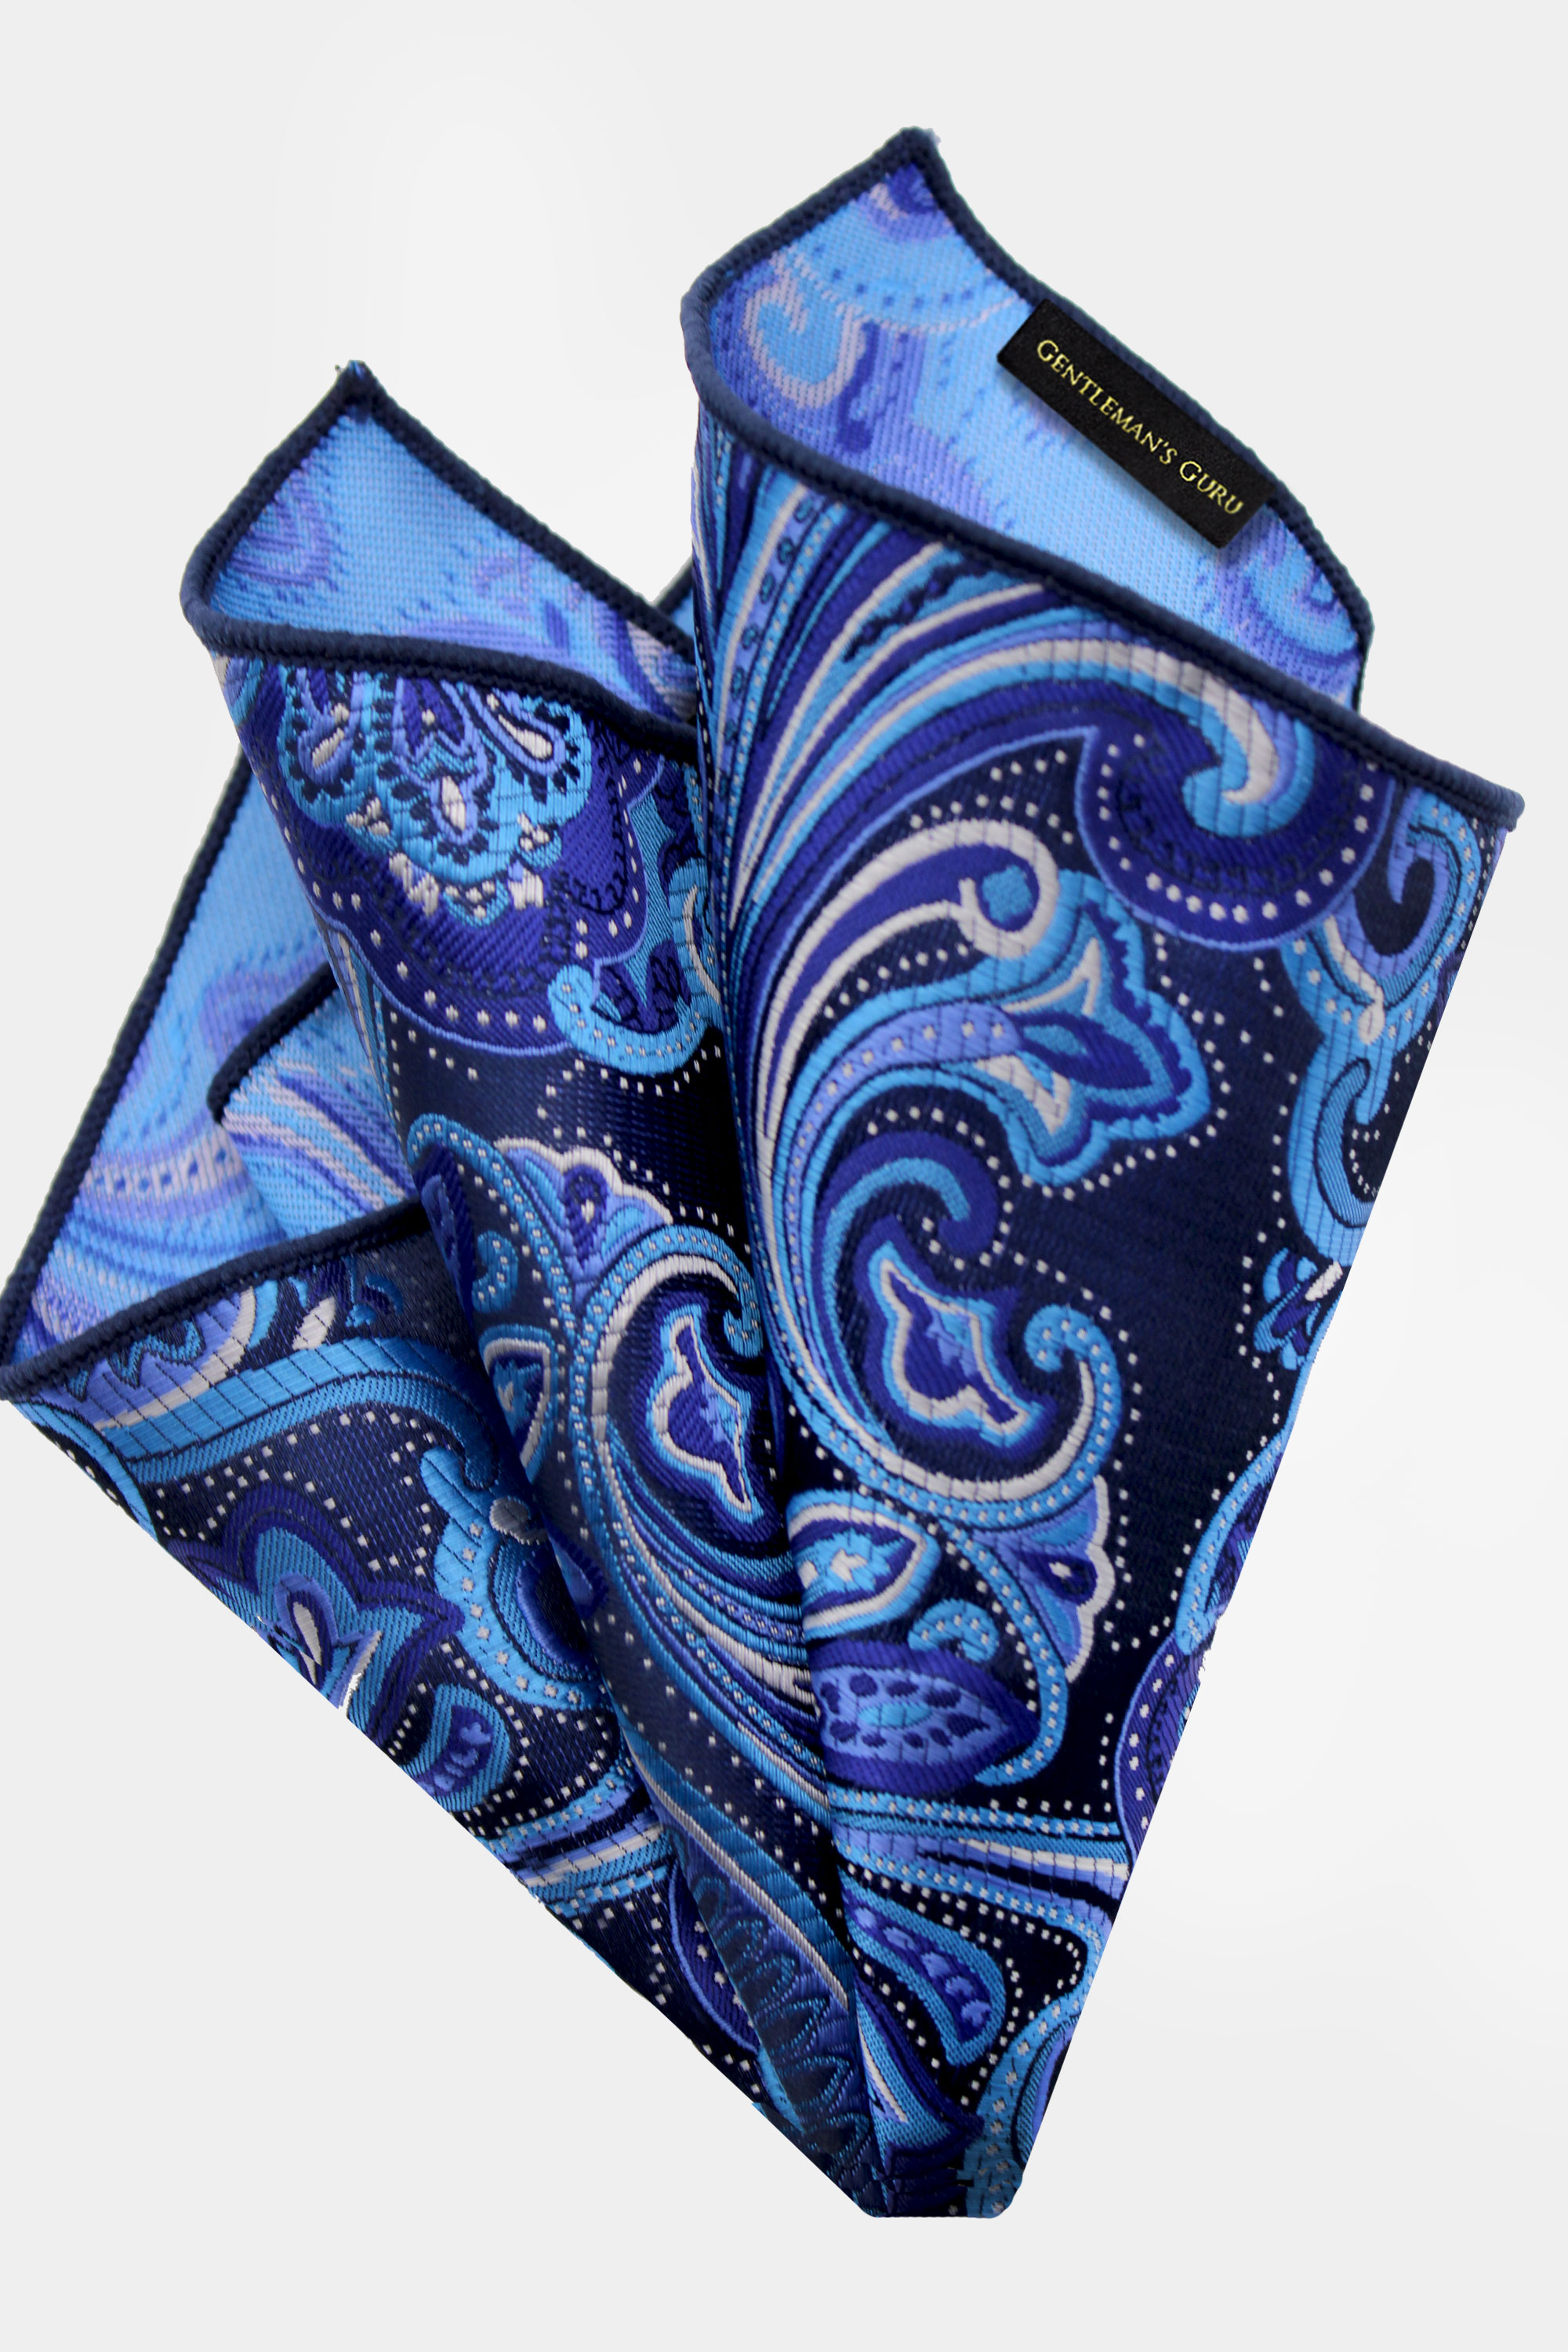 Aqua-Blue-Paisley-Pocket-Square-Handkerchief-from-Gentlemansguru.com